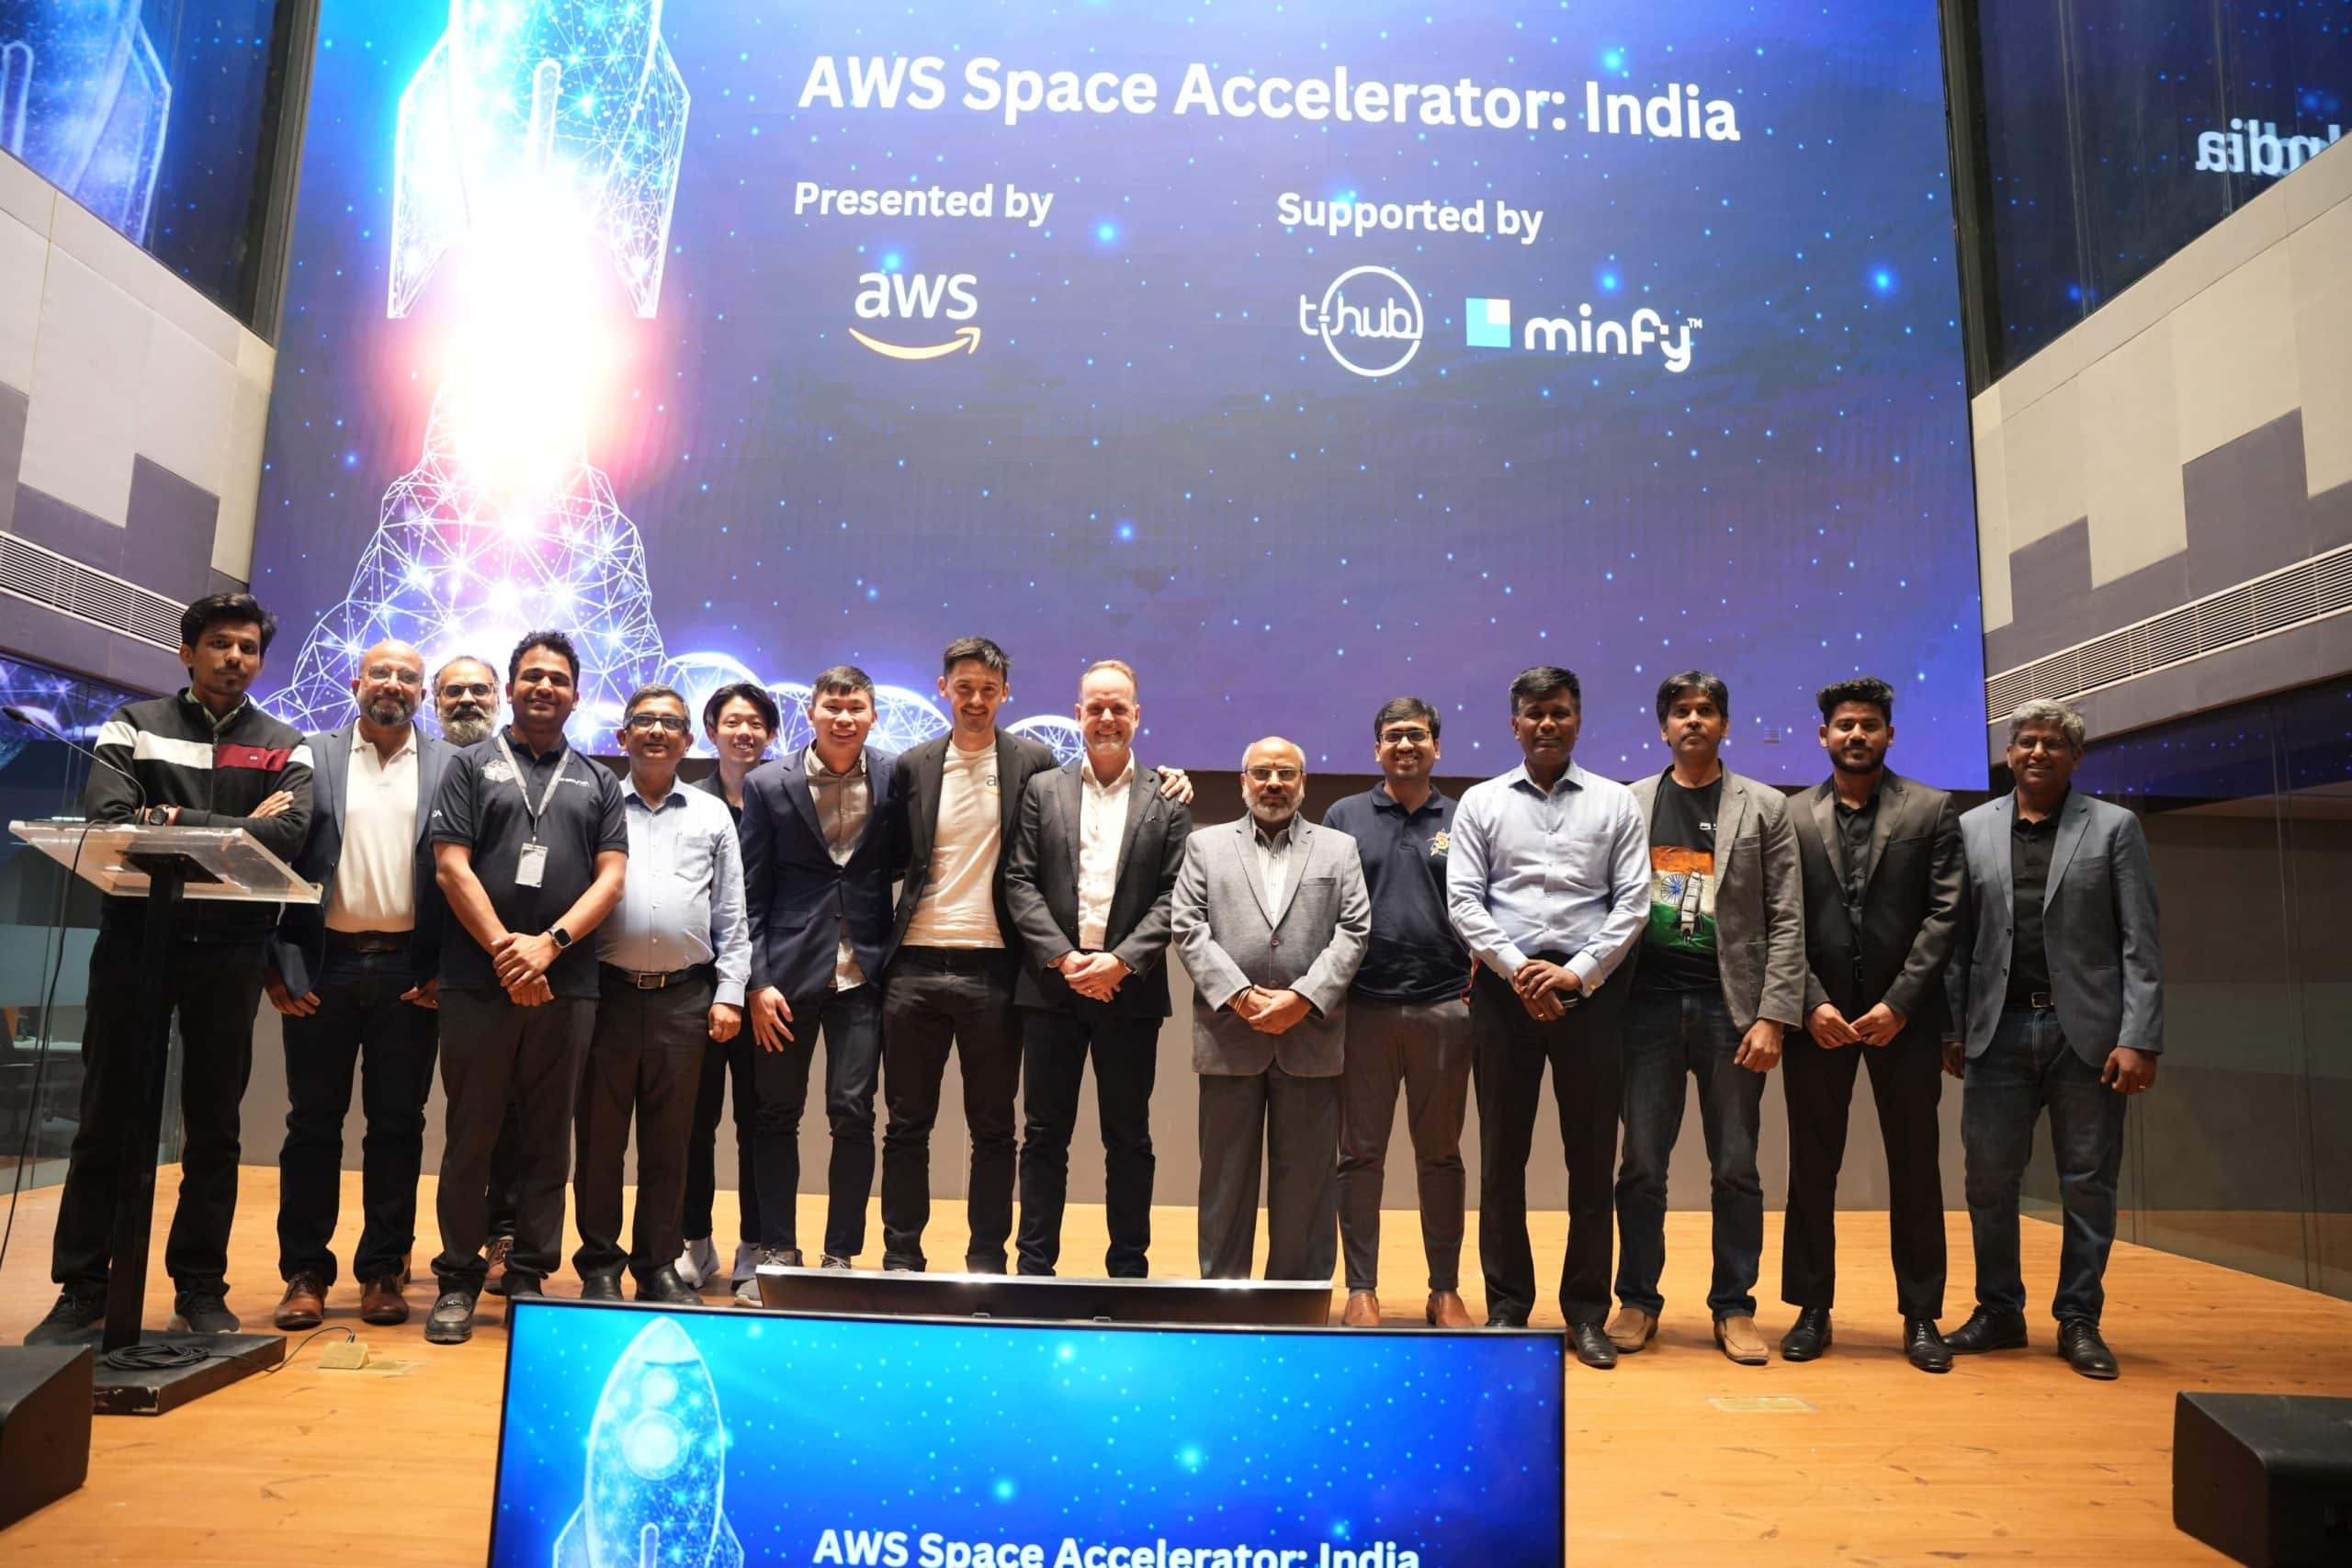 AWS Space Accelerator India